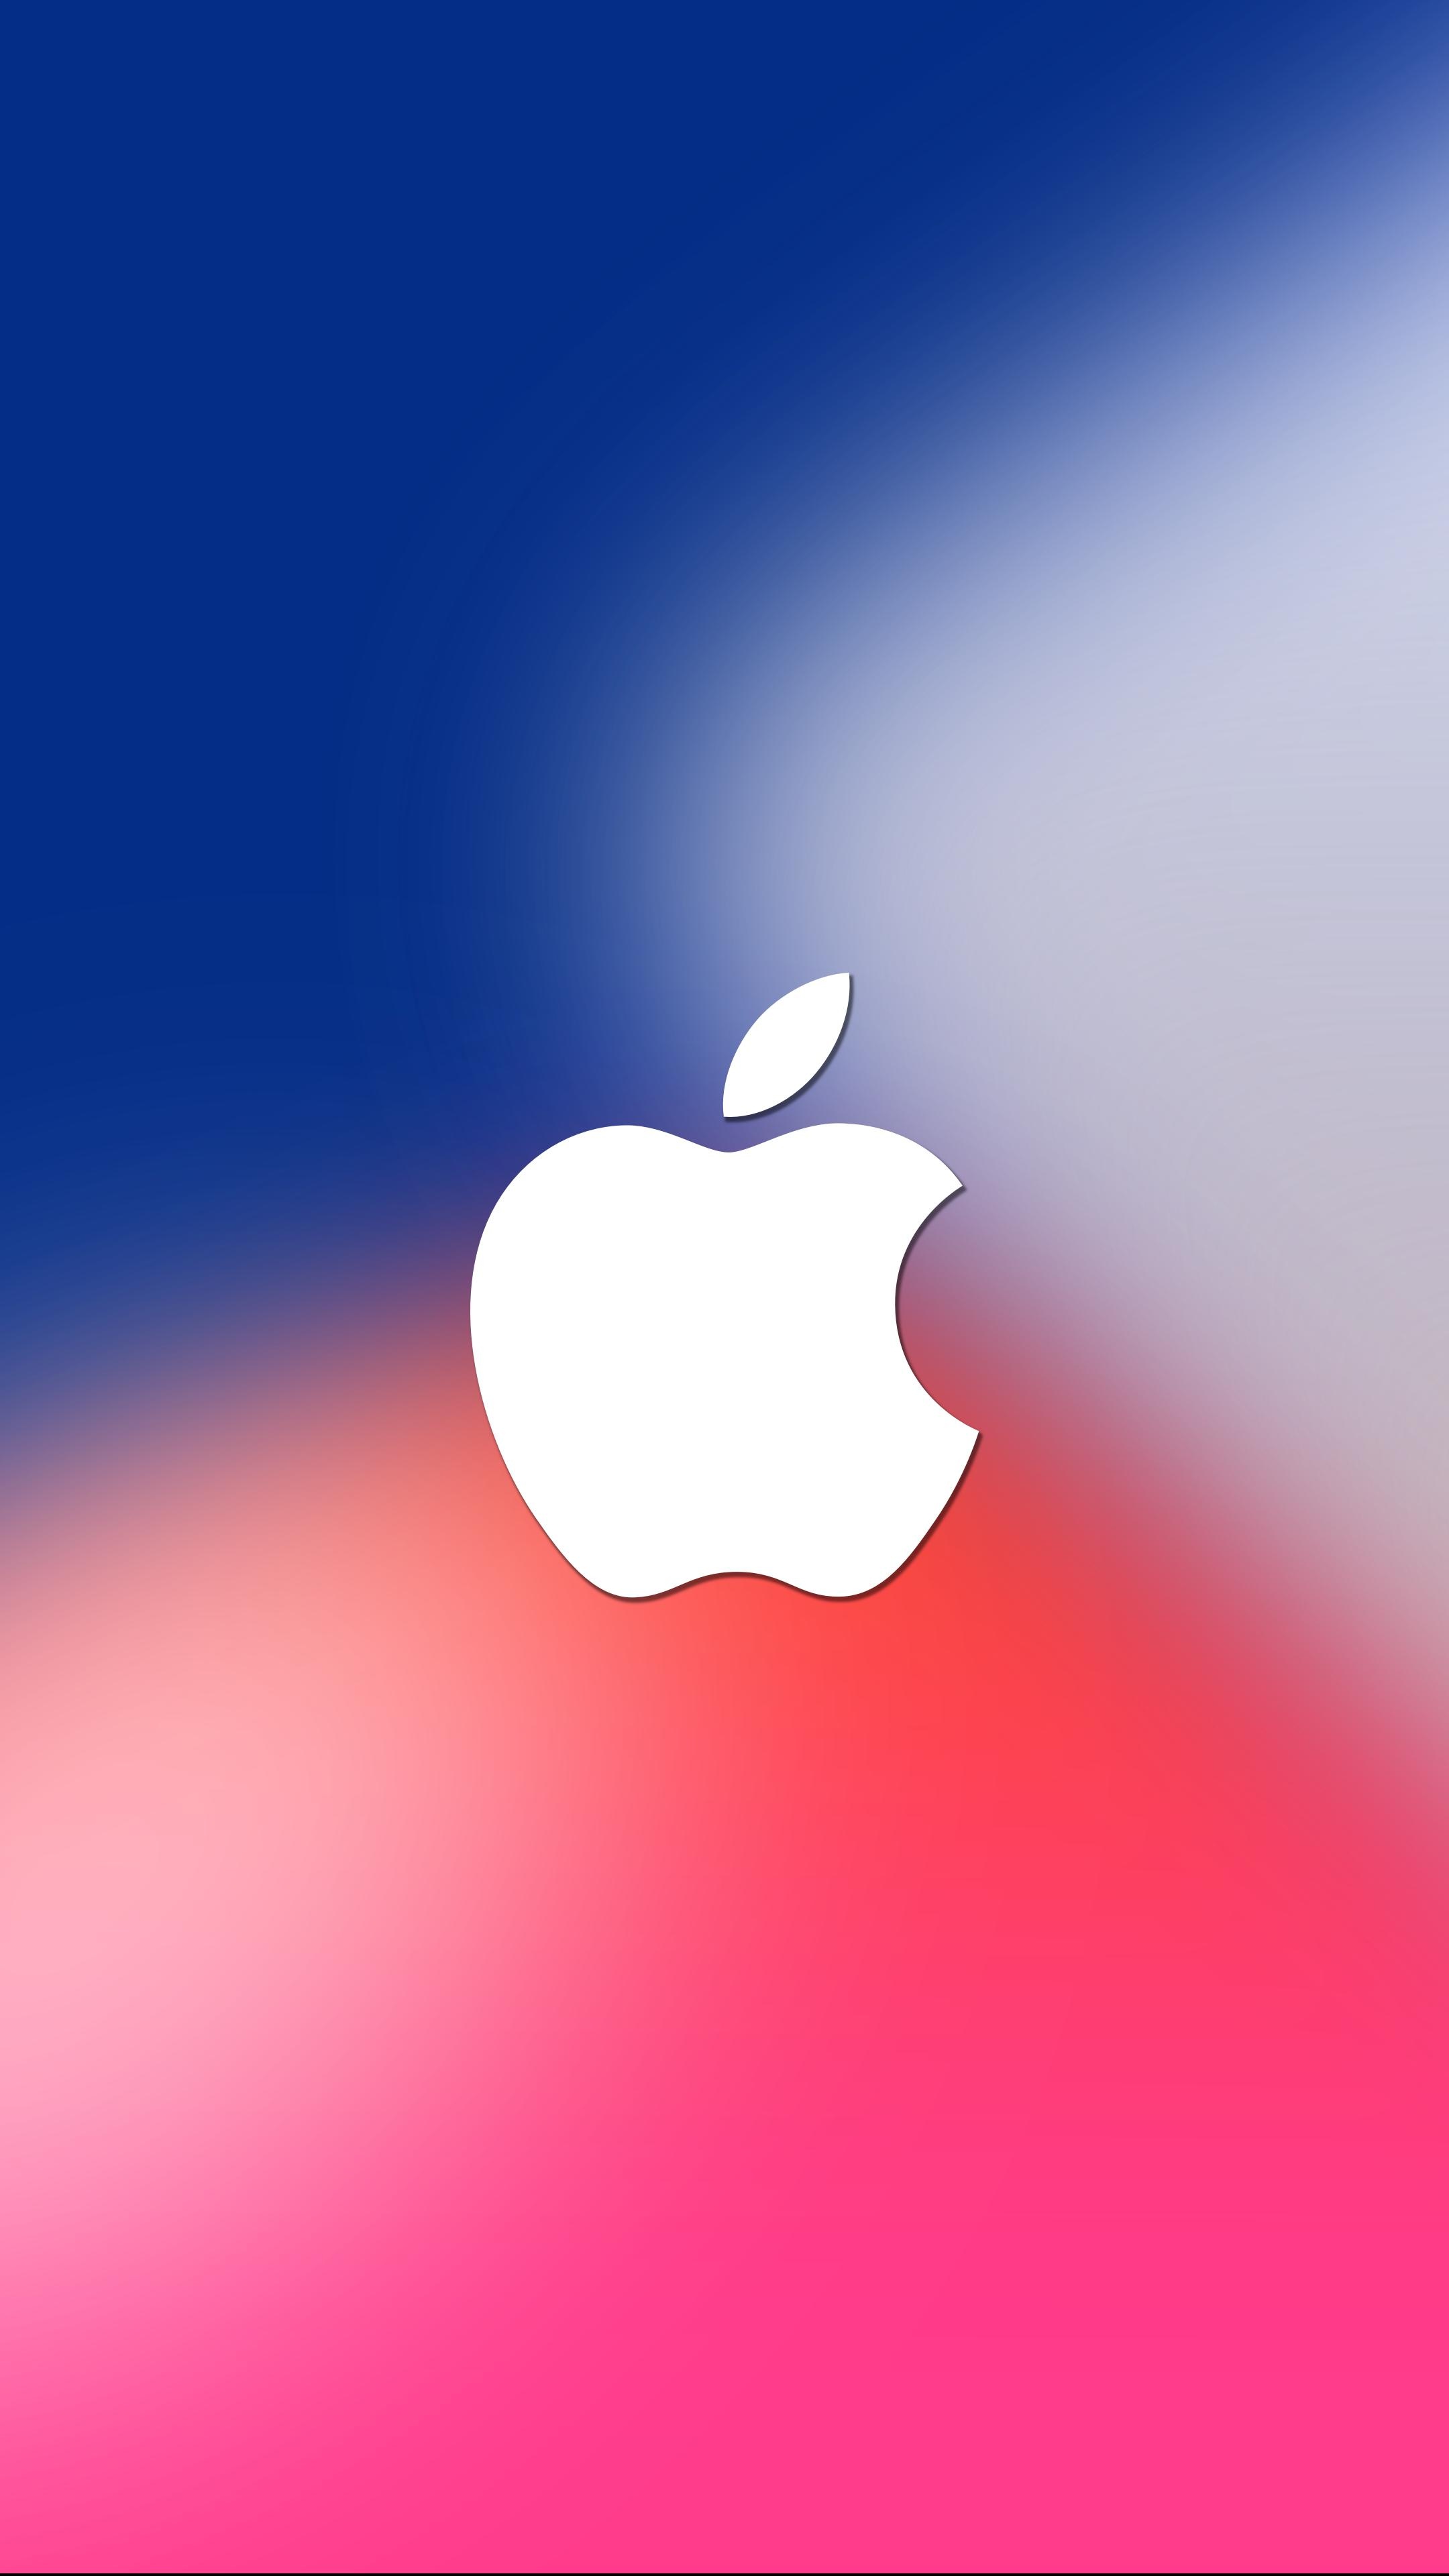 iMac Logo, High-resolution visuals, Apple brand recognition, Stunning graphics, 2160x3840 4K Handy